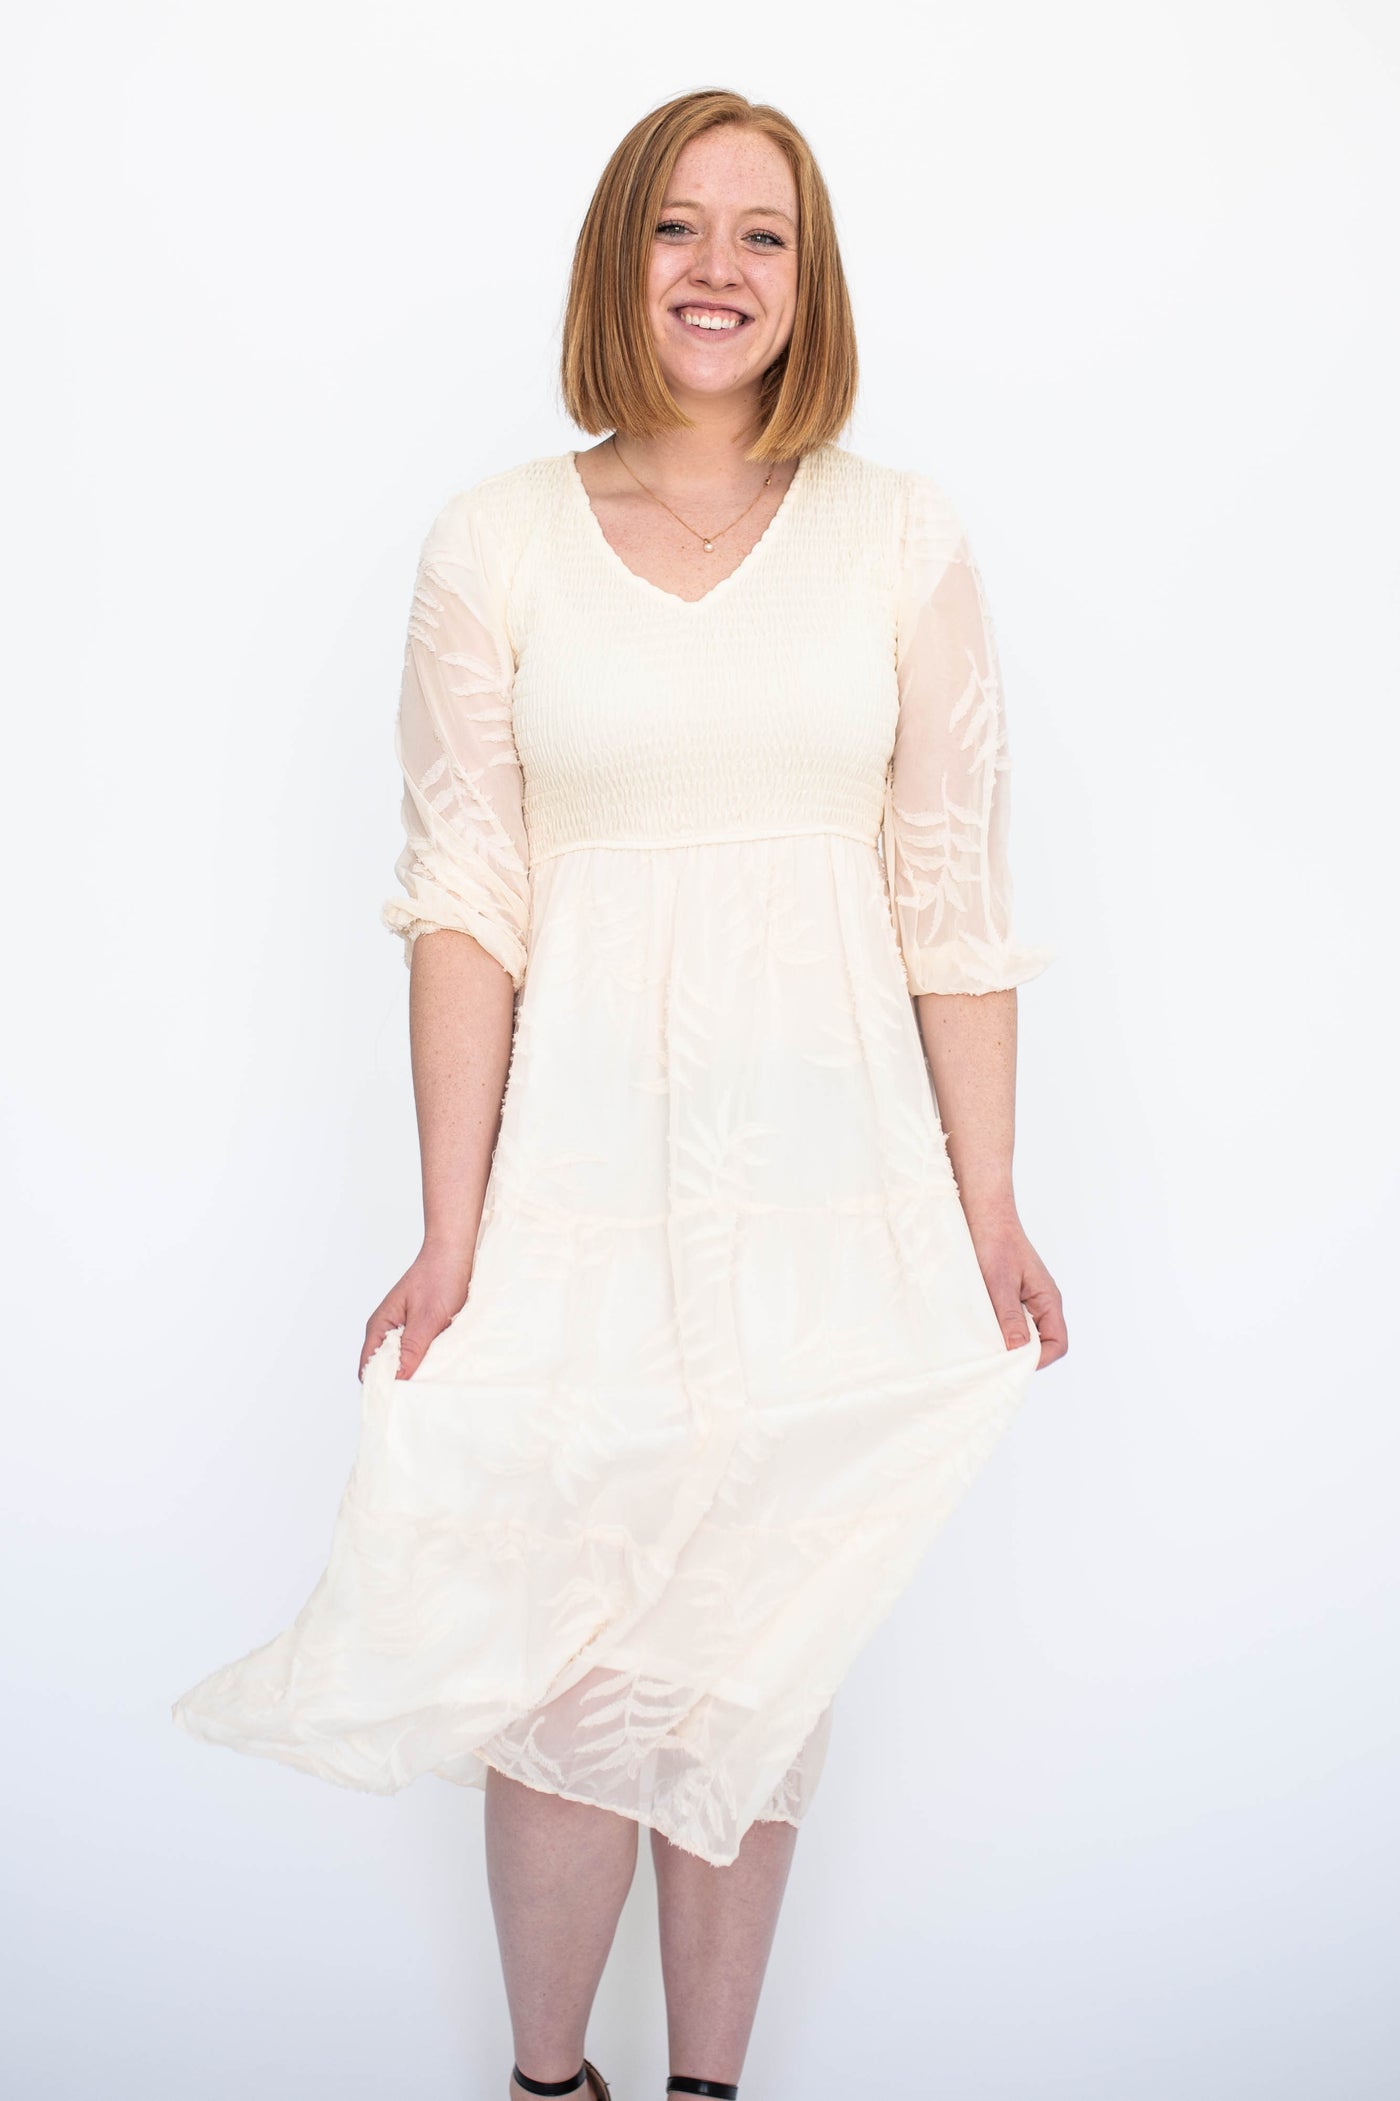 Short sleeve cream dress with a smocked bodice